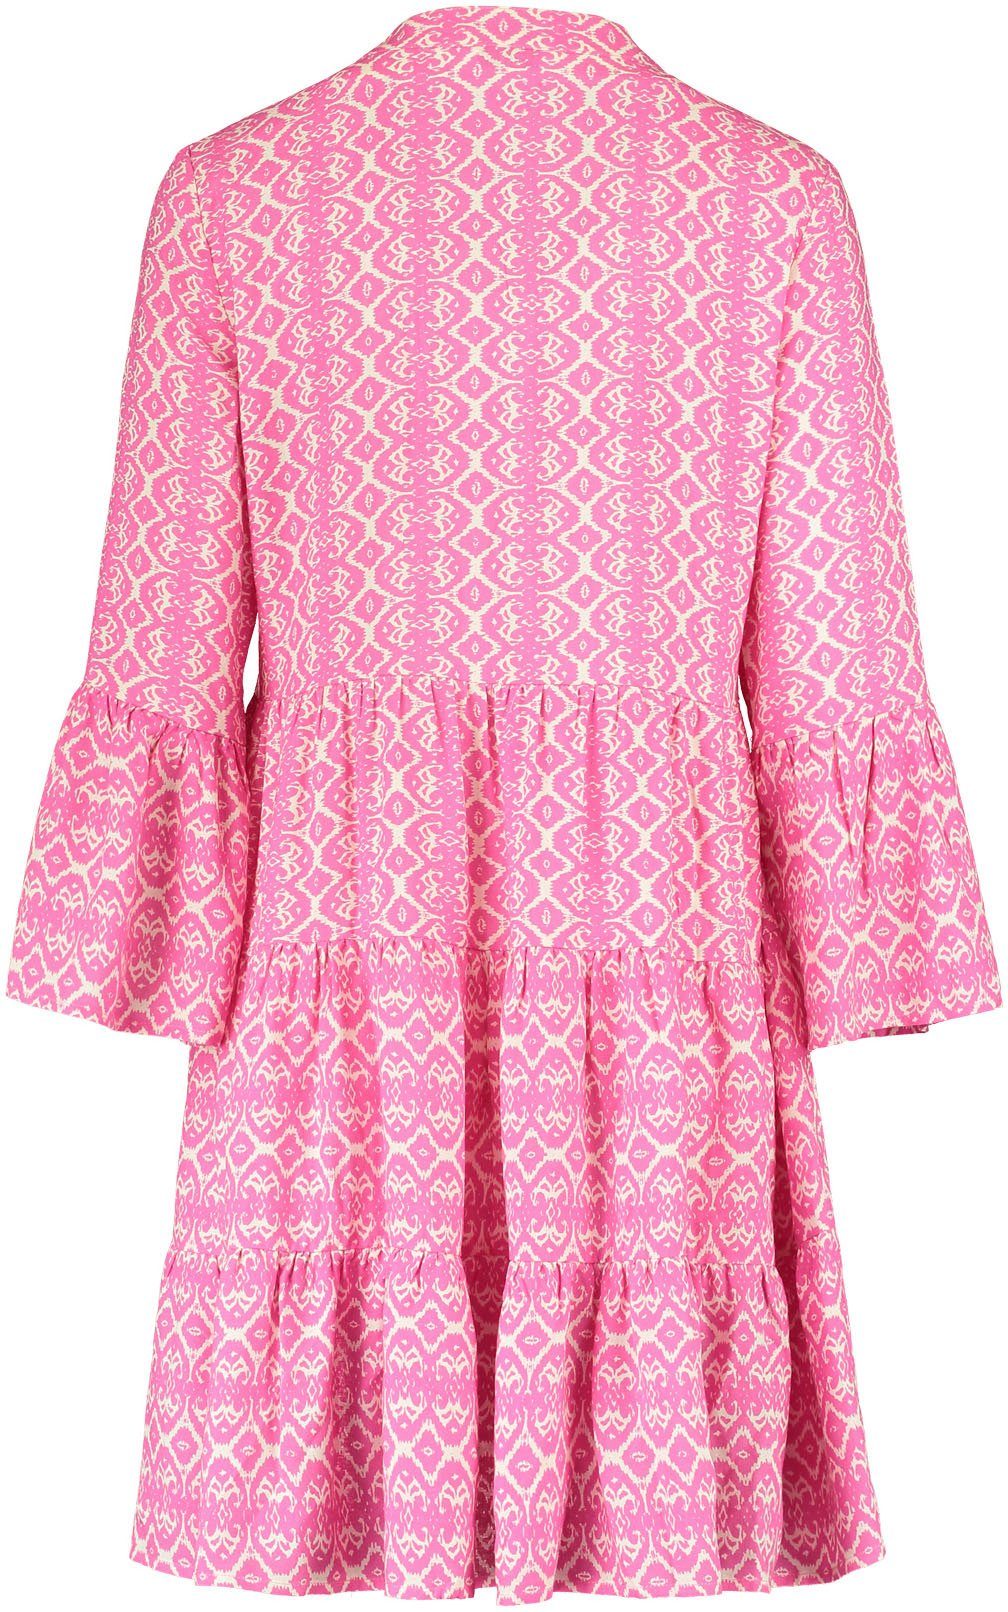 mit Style Me44lika ZABAIONE Dress Pink Tunika Sommerkleid im Volant